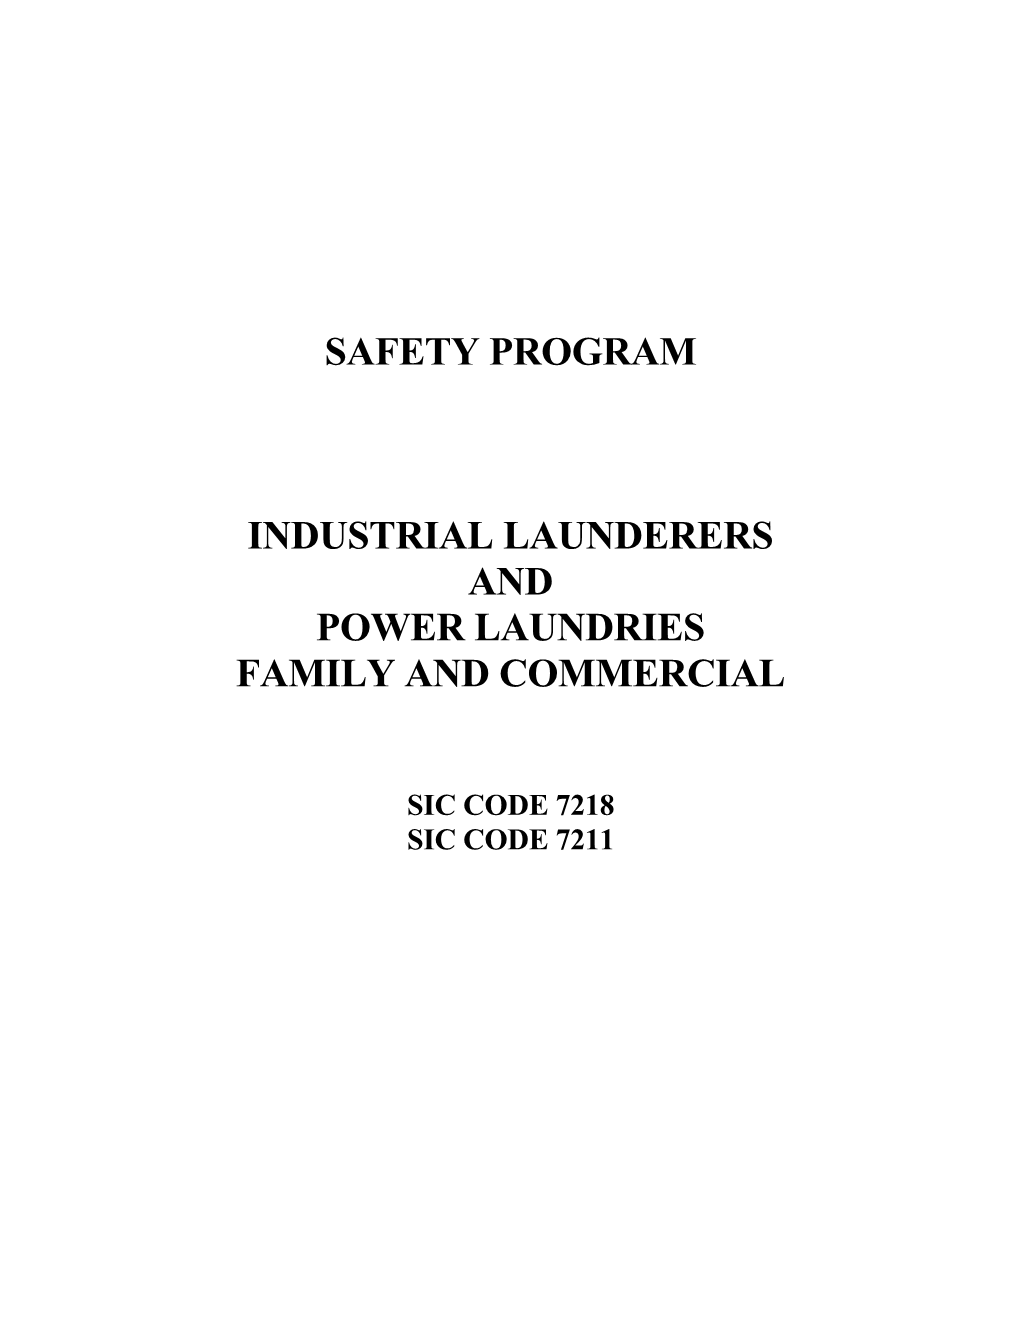 Laundries Safety Program